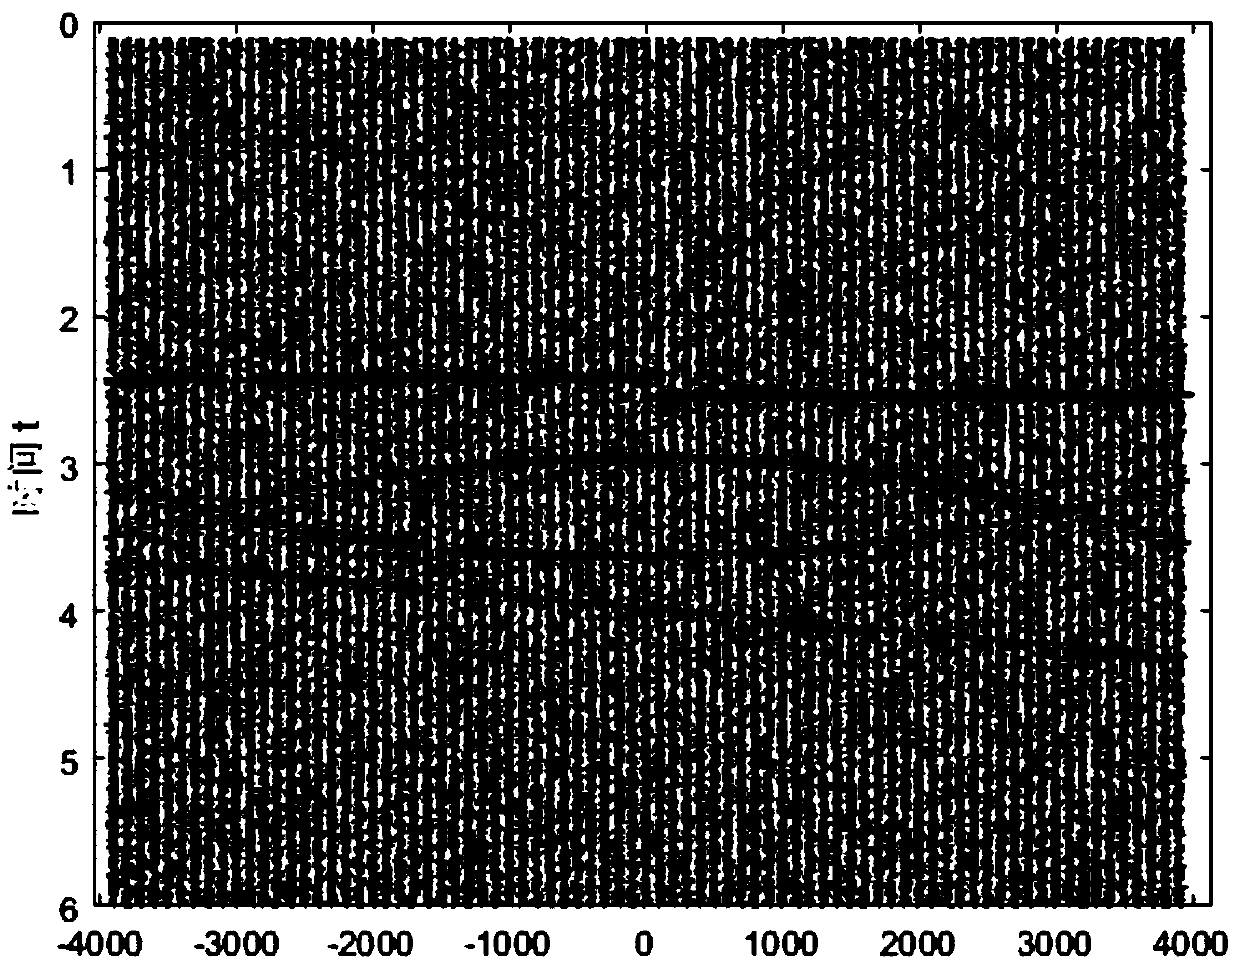 Seismic data noise-reduction method based on multi-resolution singular value decomposition